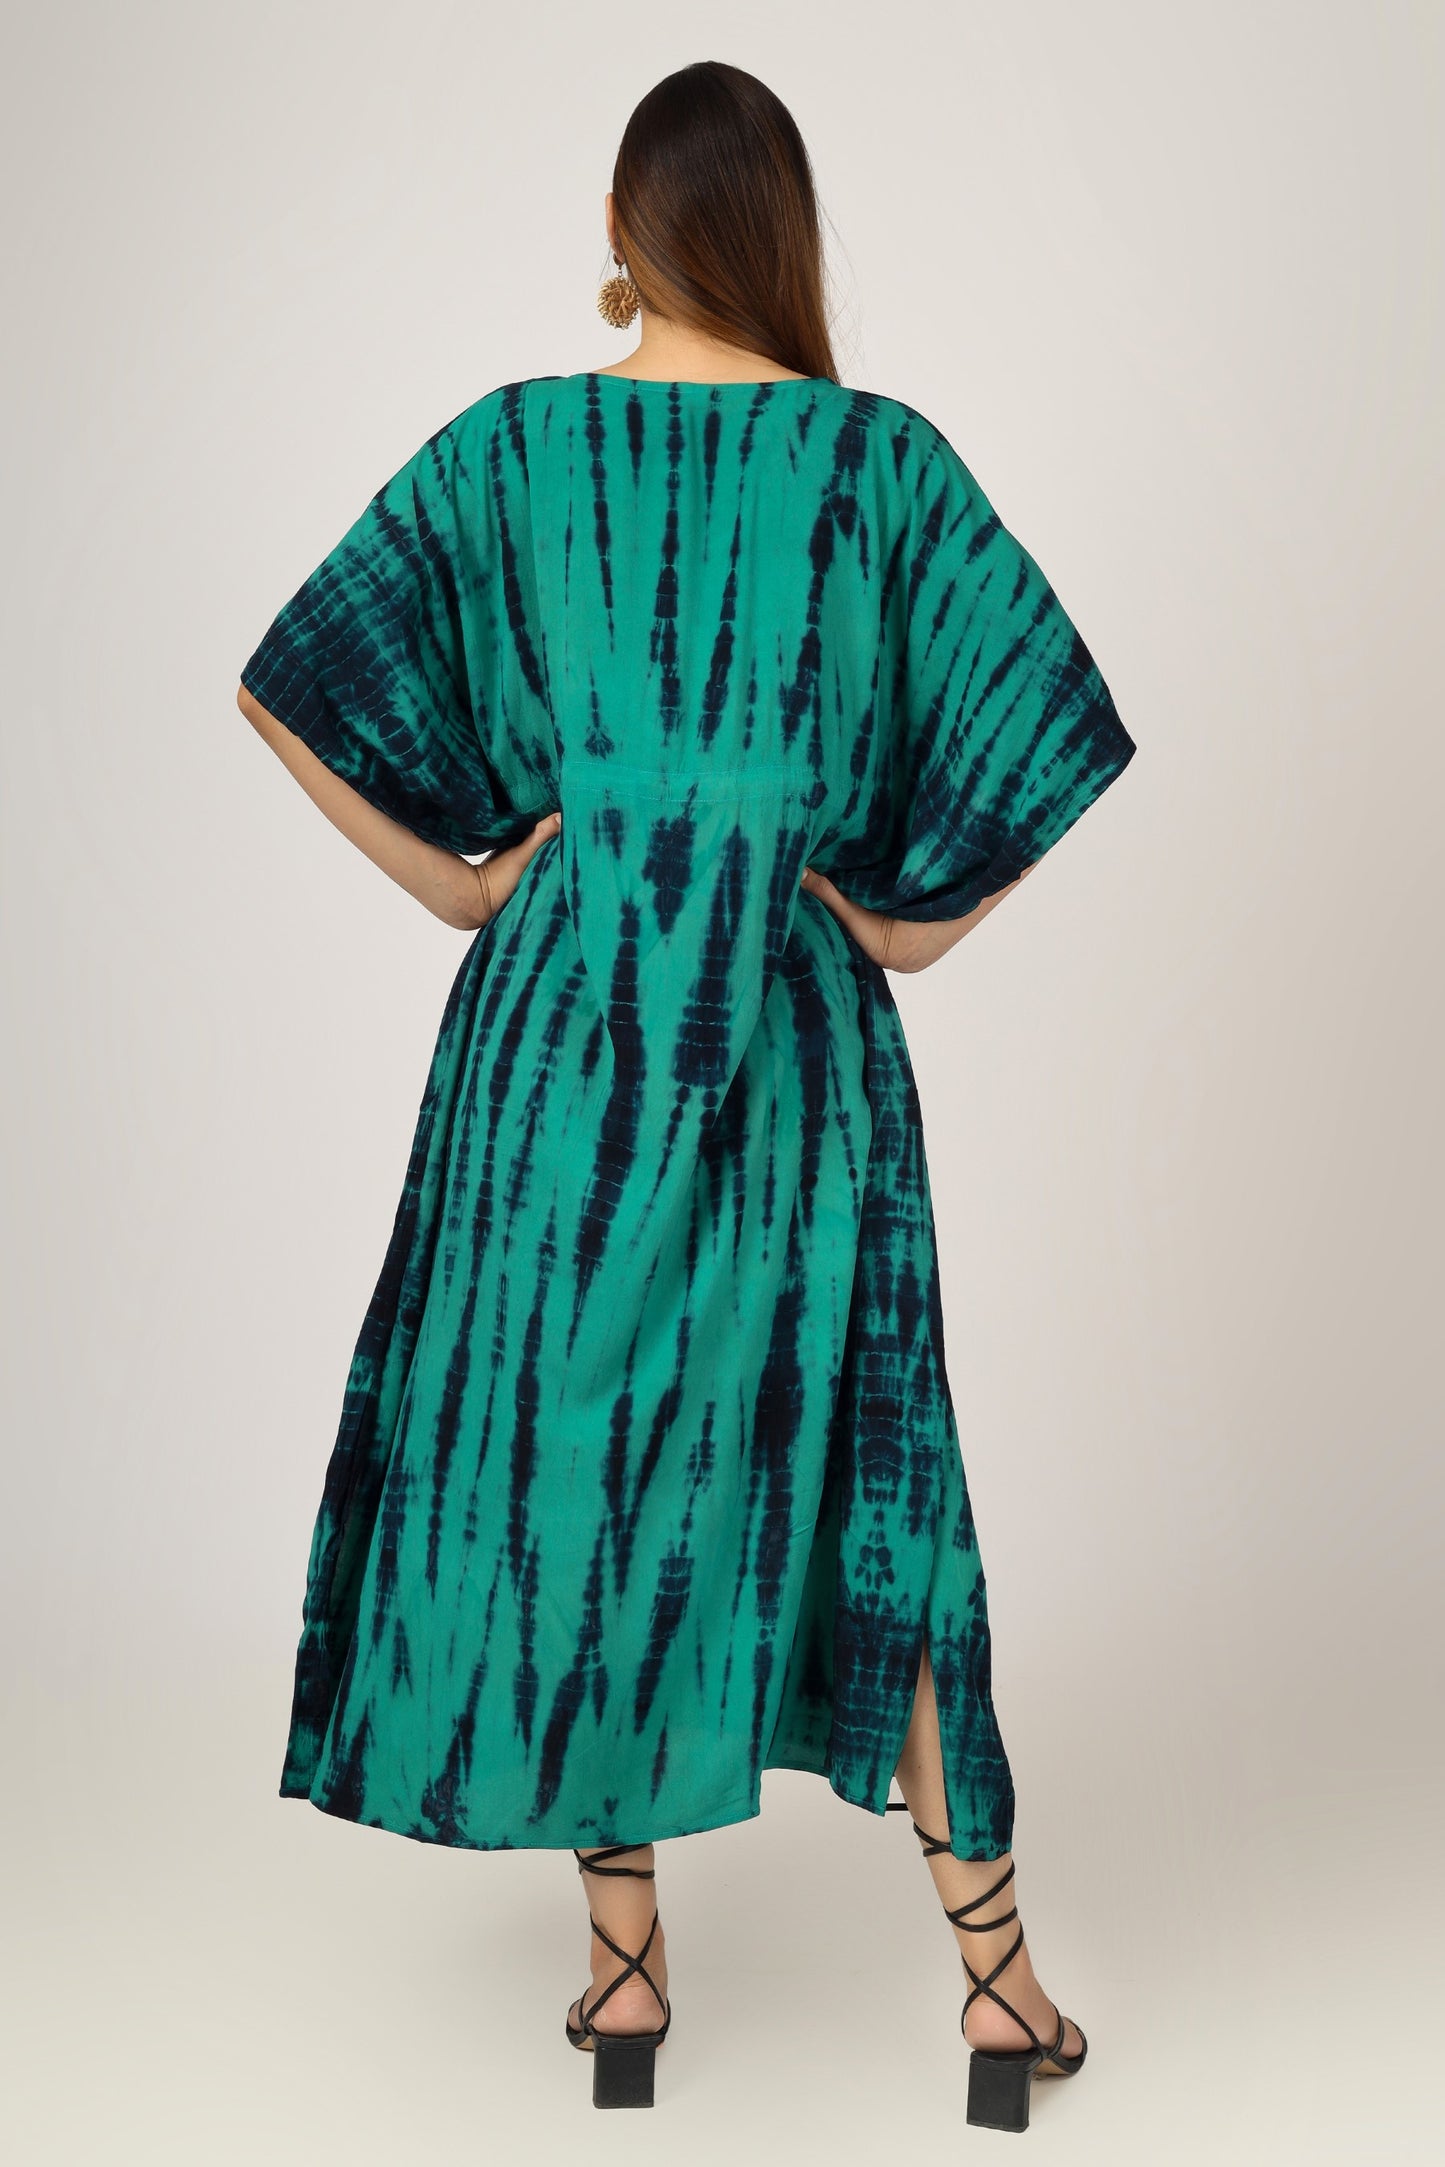 Earthen Threads Beach Summer Shibori Tie Dye Kaftan Kimono Teal Green